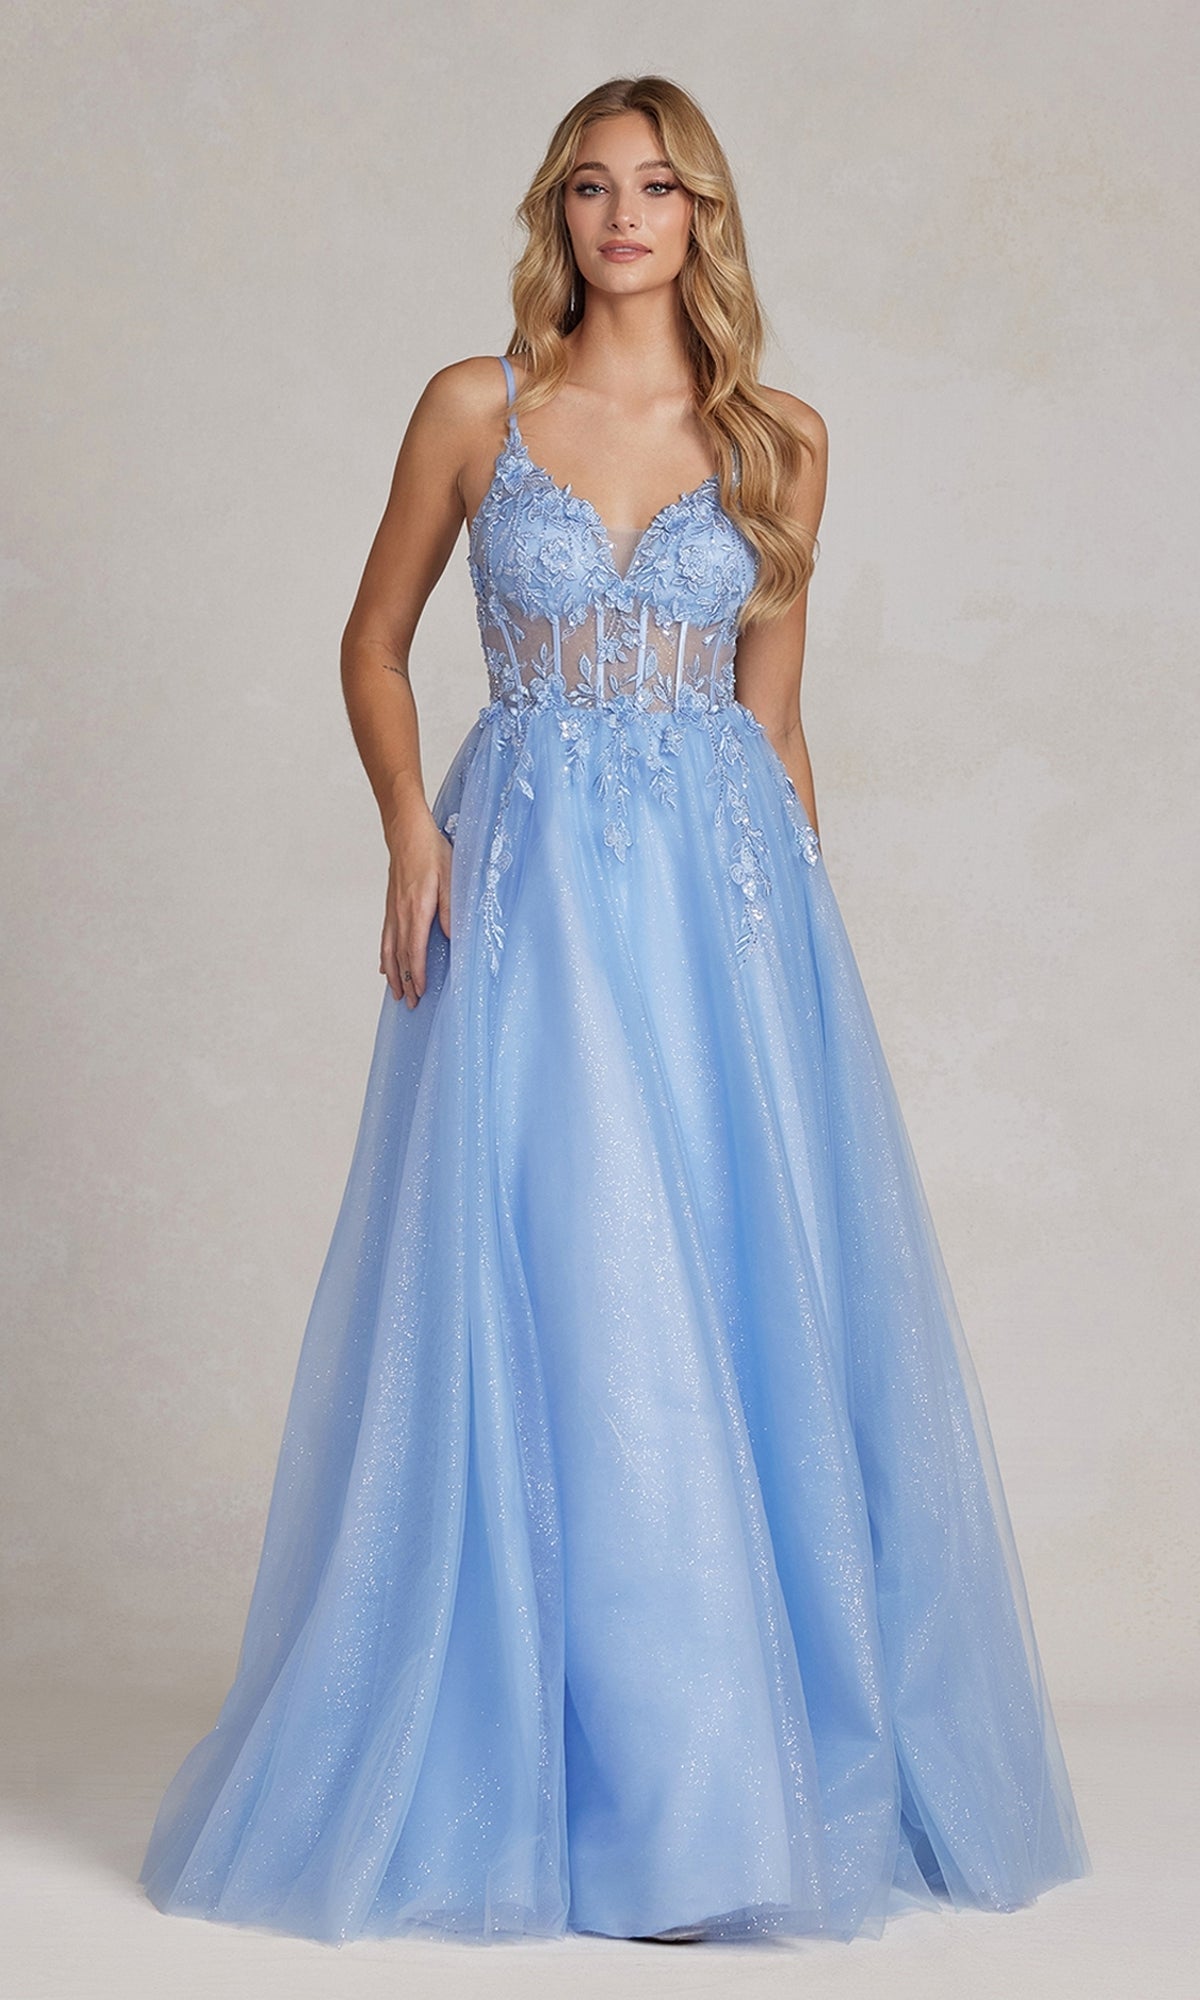  Sheer-Bodice A-Line Light Blue Long Prom Dress